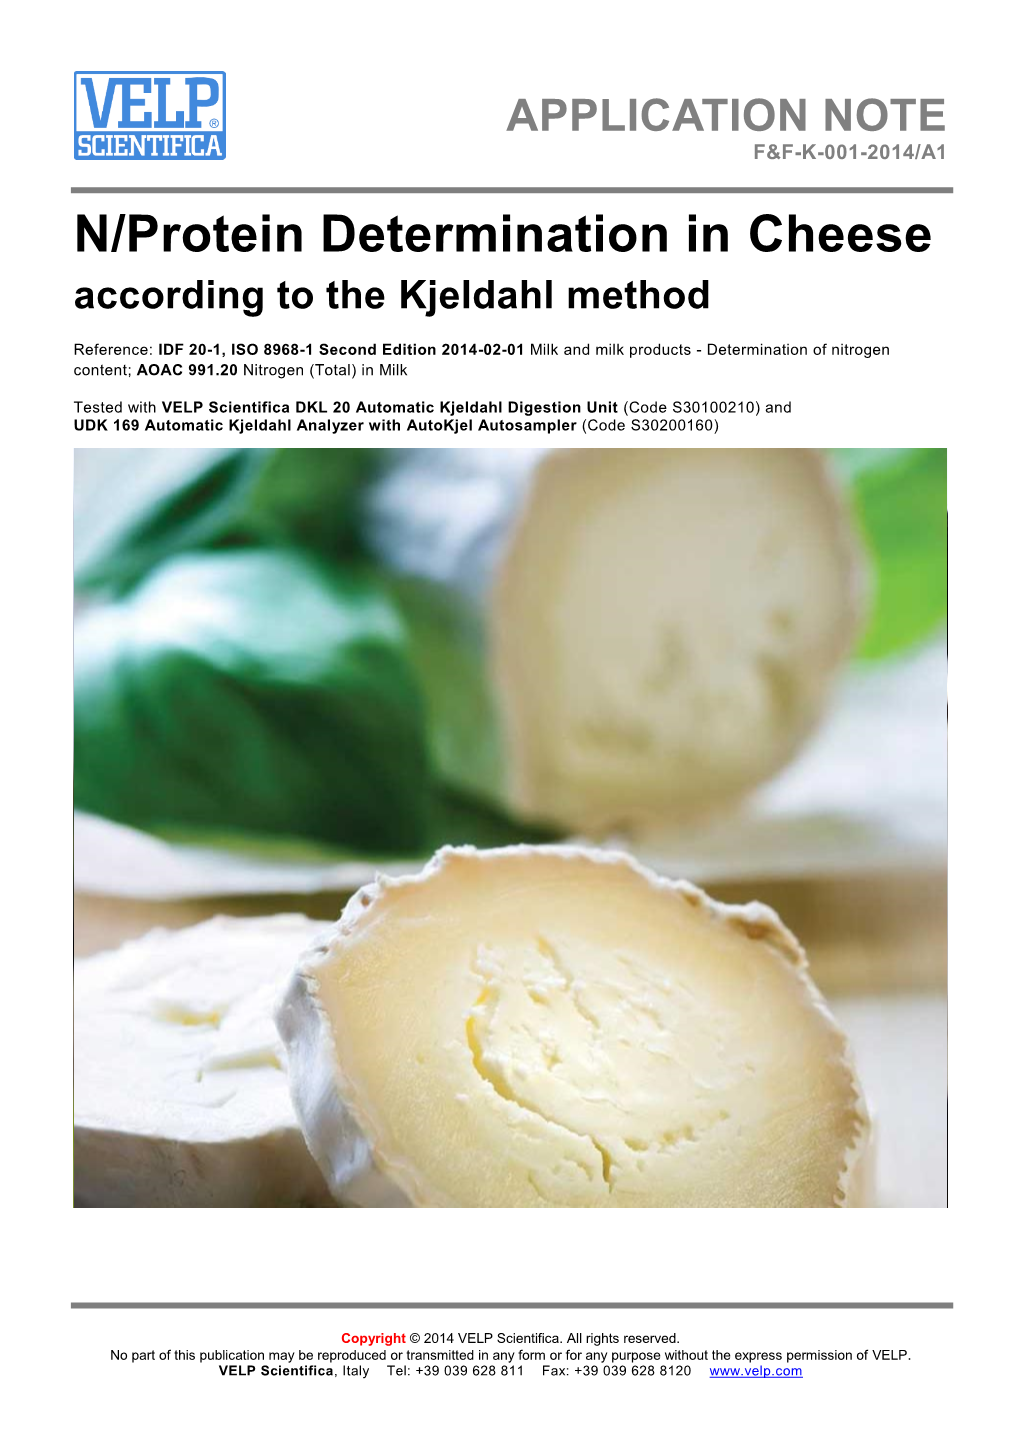 N/Protein Determination in Cheese According to the Kjeldahl Method